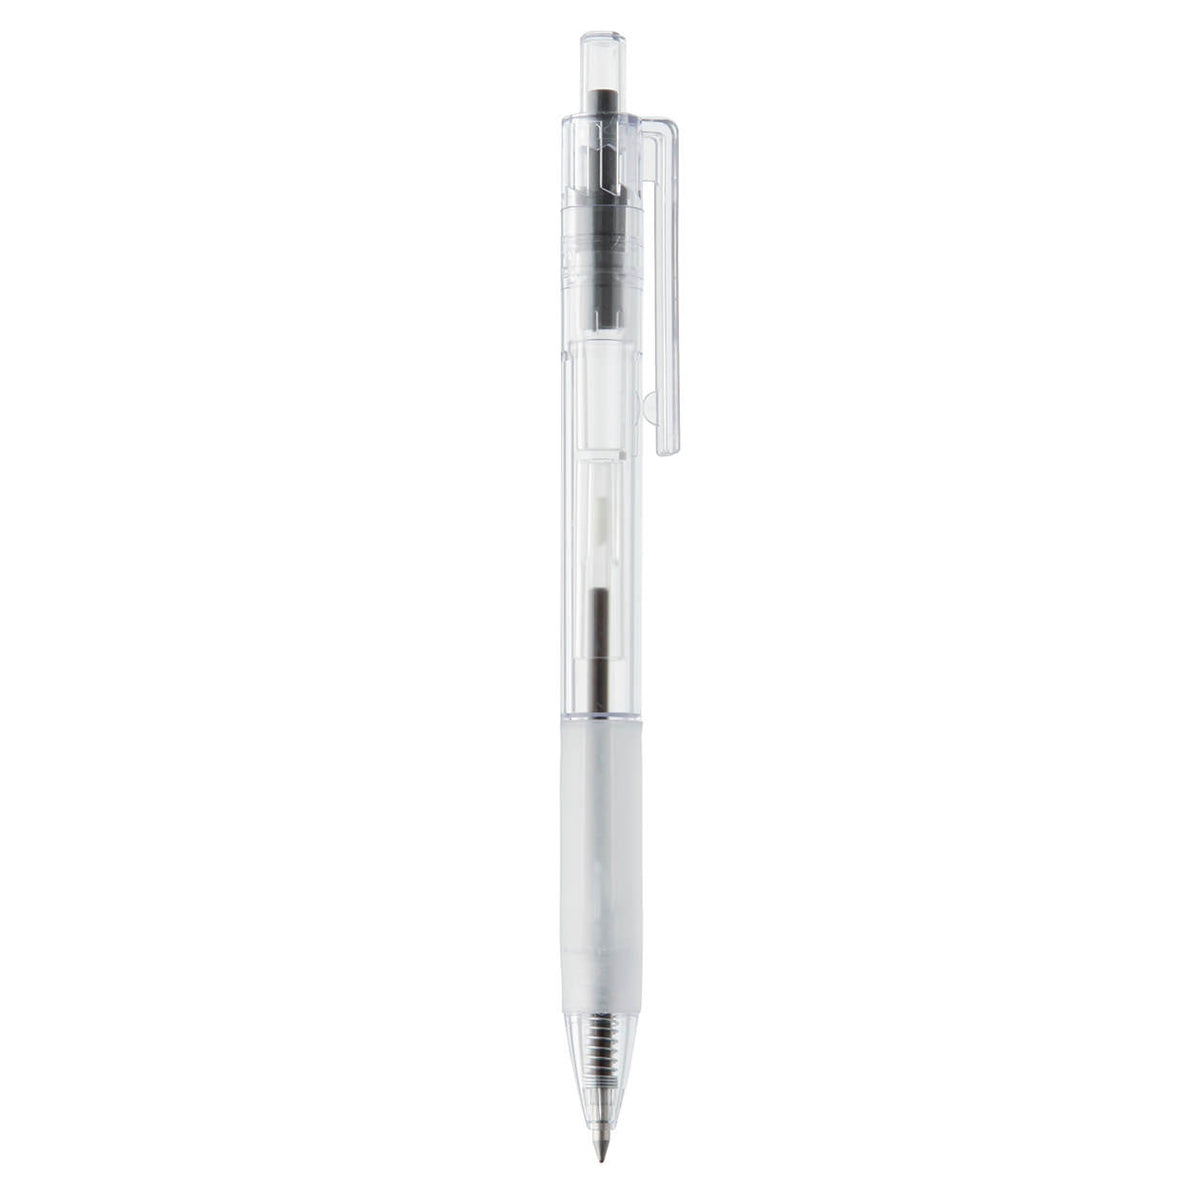 Polycarbonate Ballpoint Pen 0.7mm